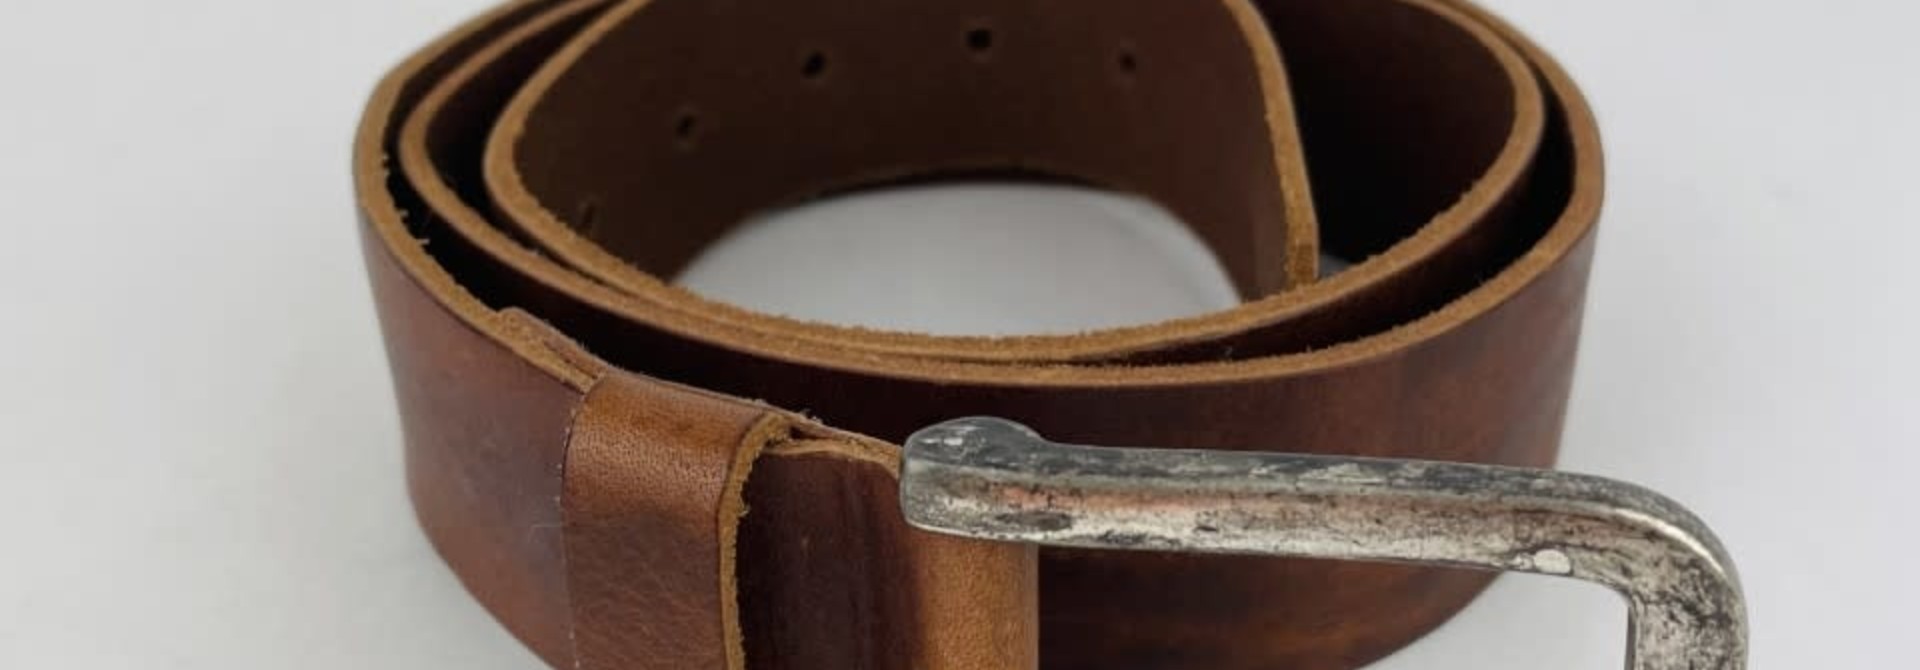 Dean leather belt Brown